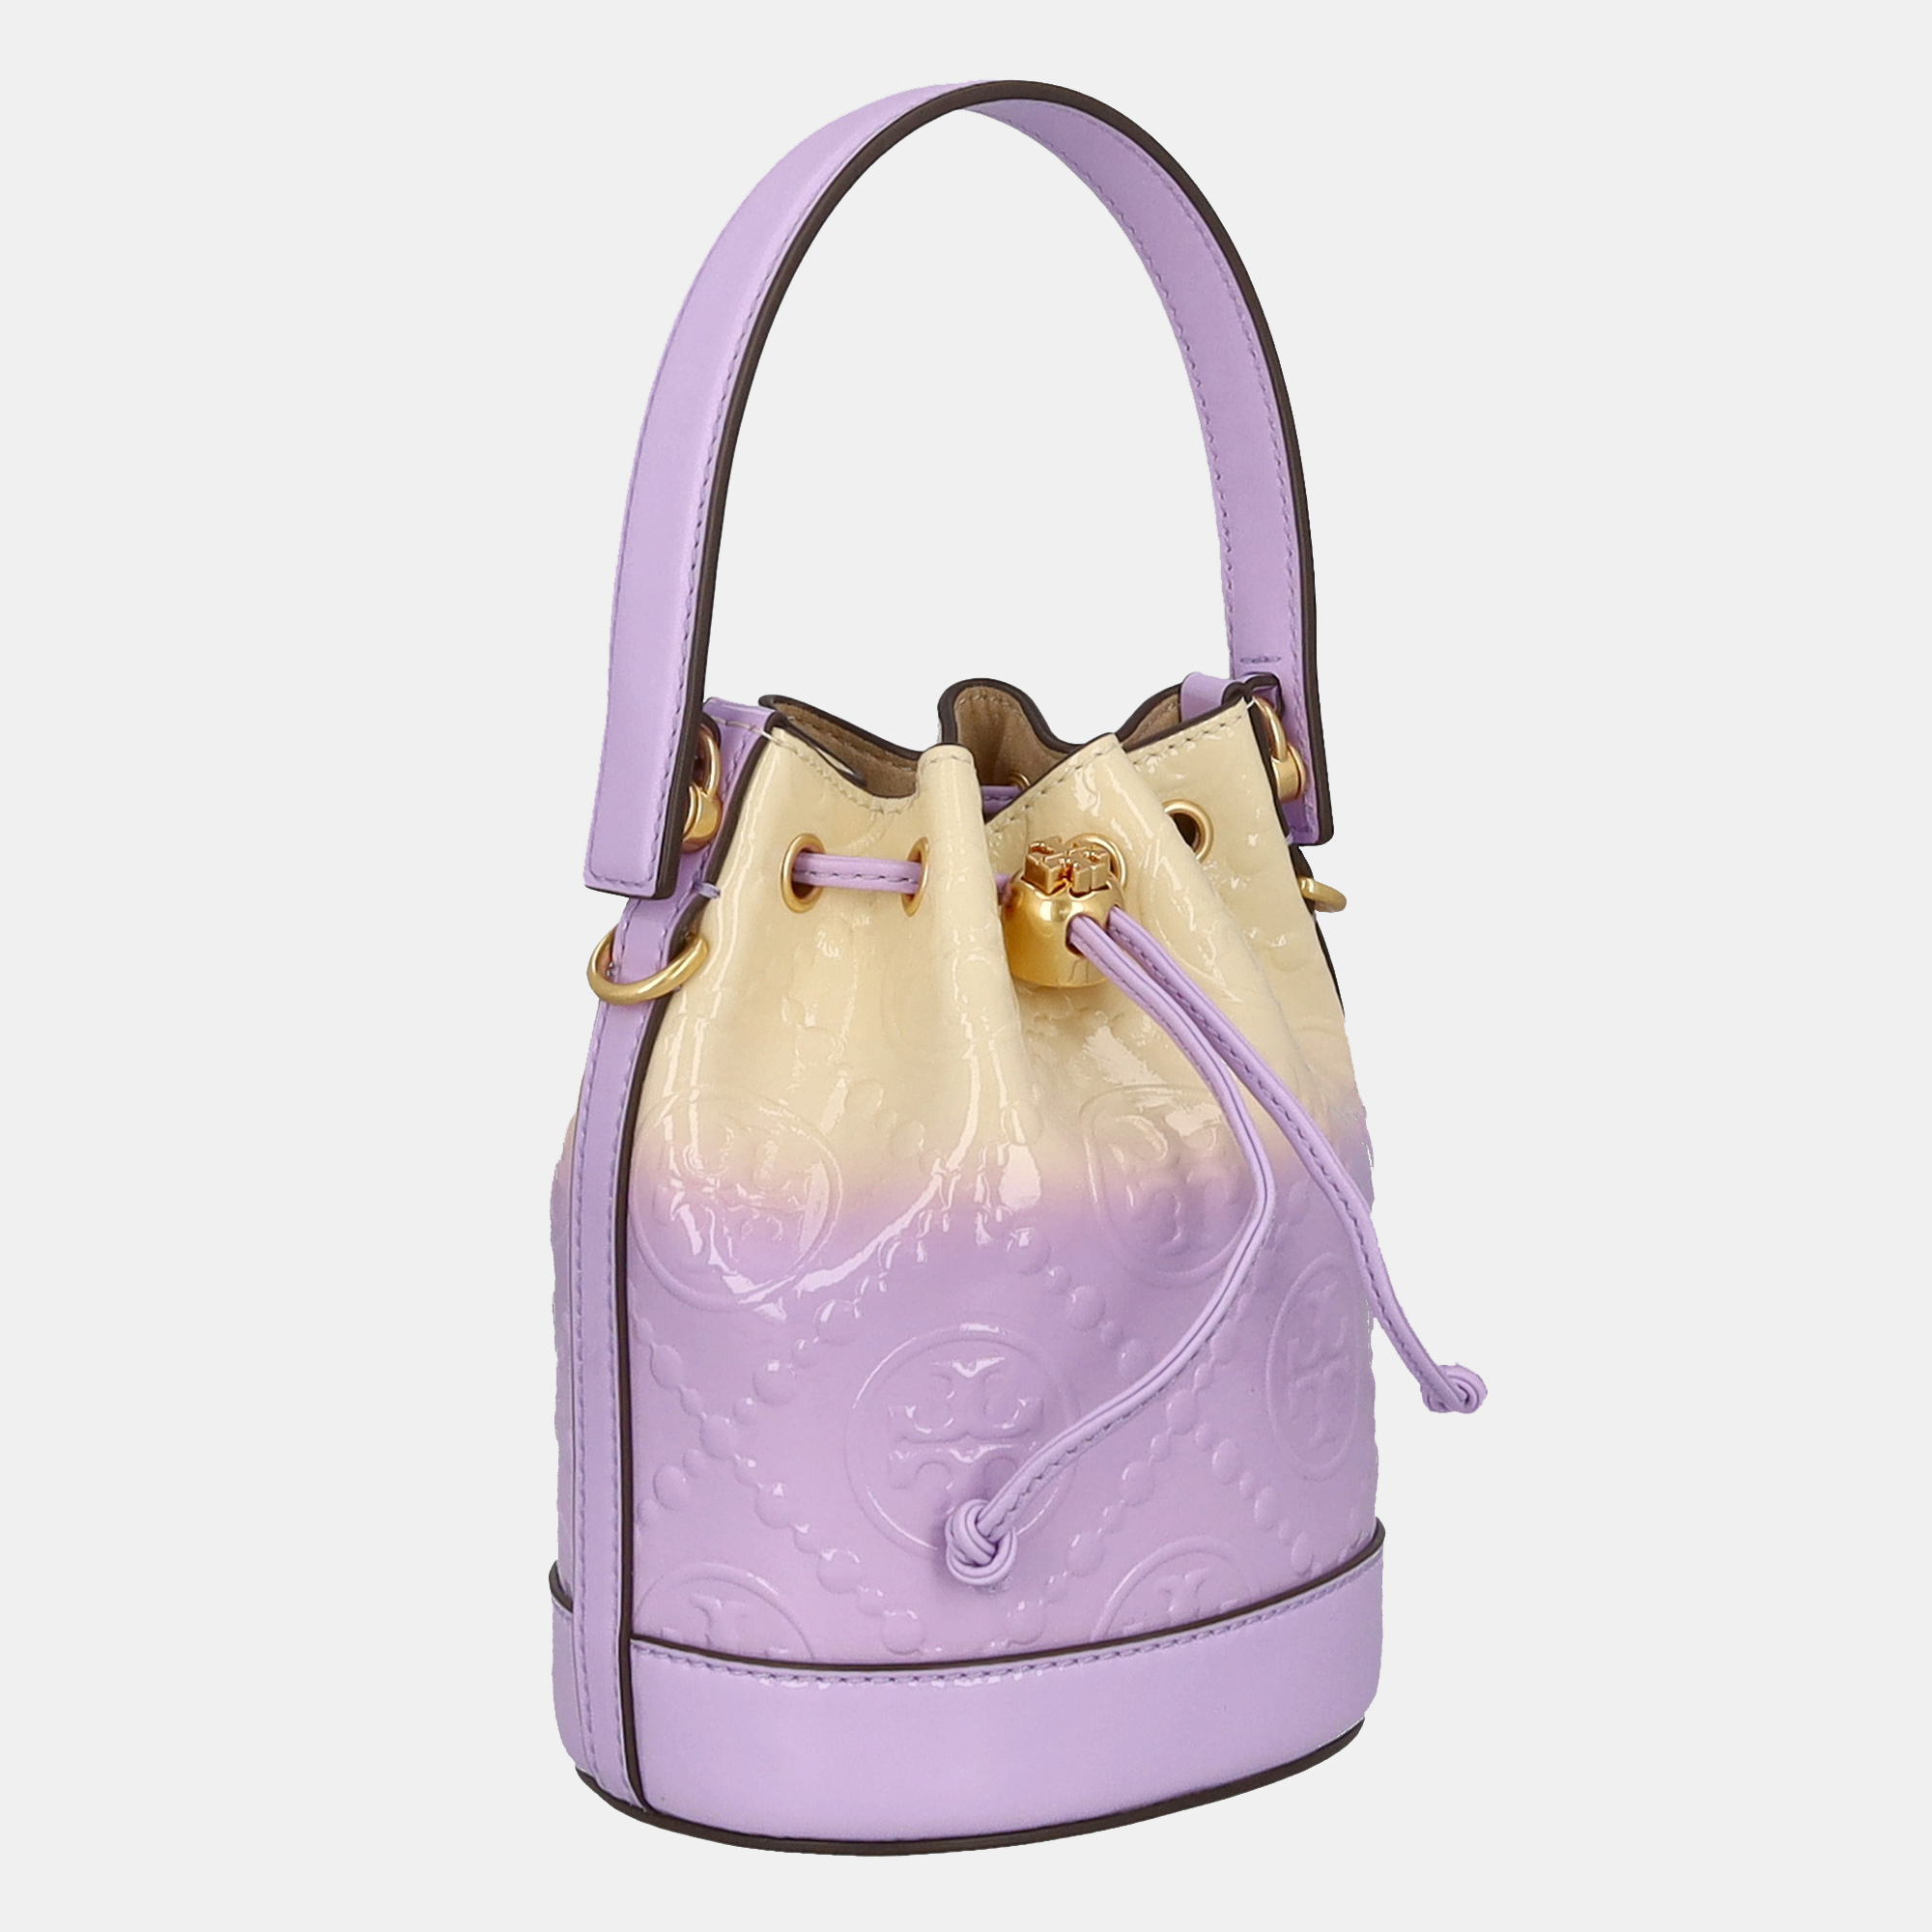 Tory Burch  Women's Leather Handbag - Beige - One Size